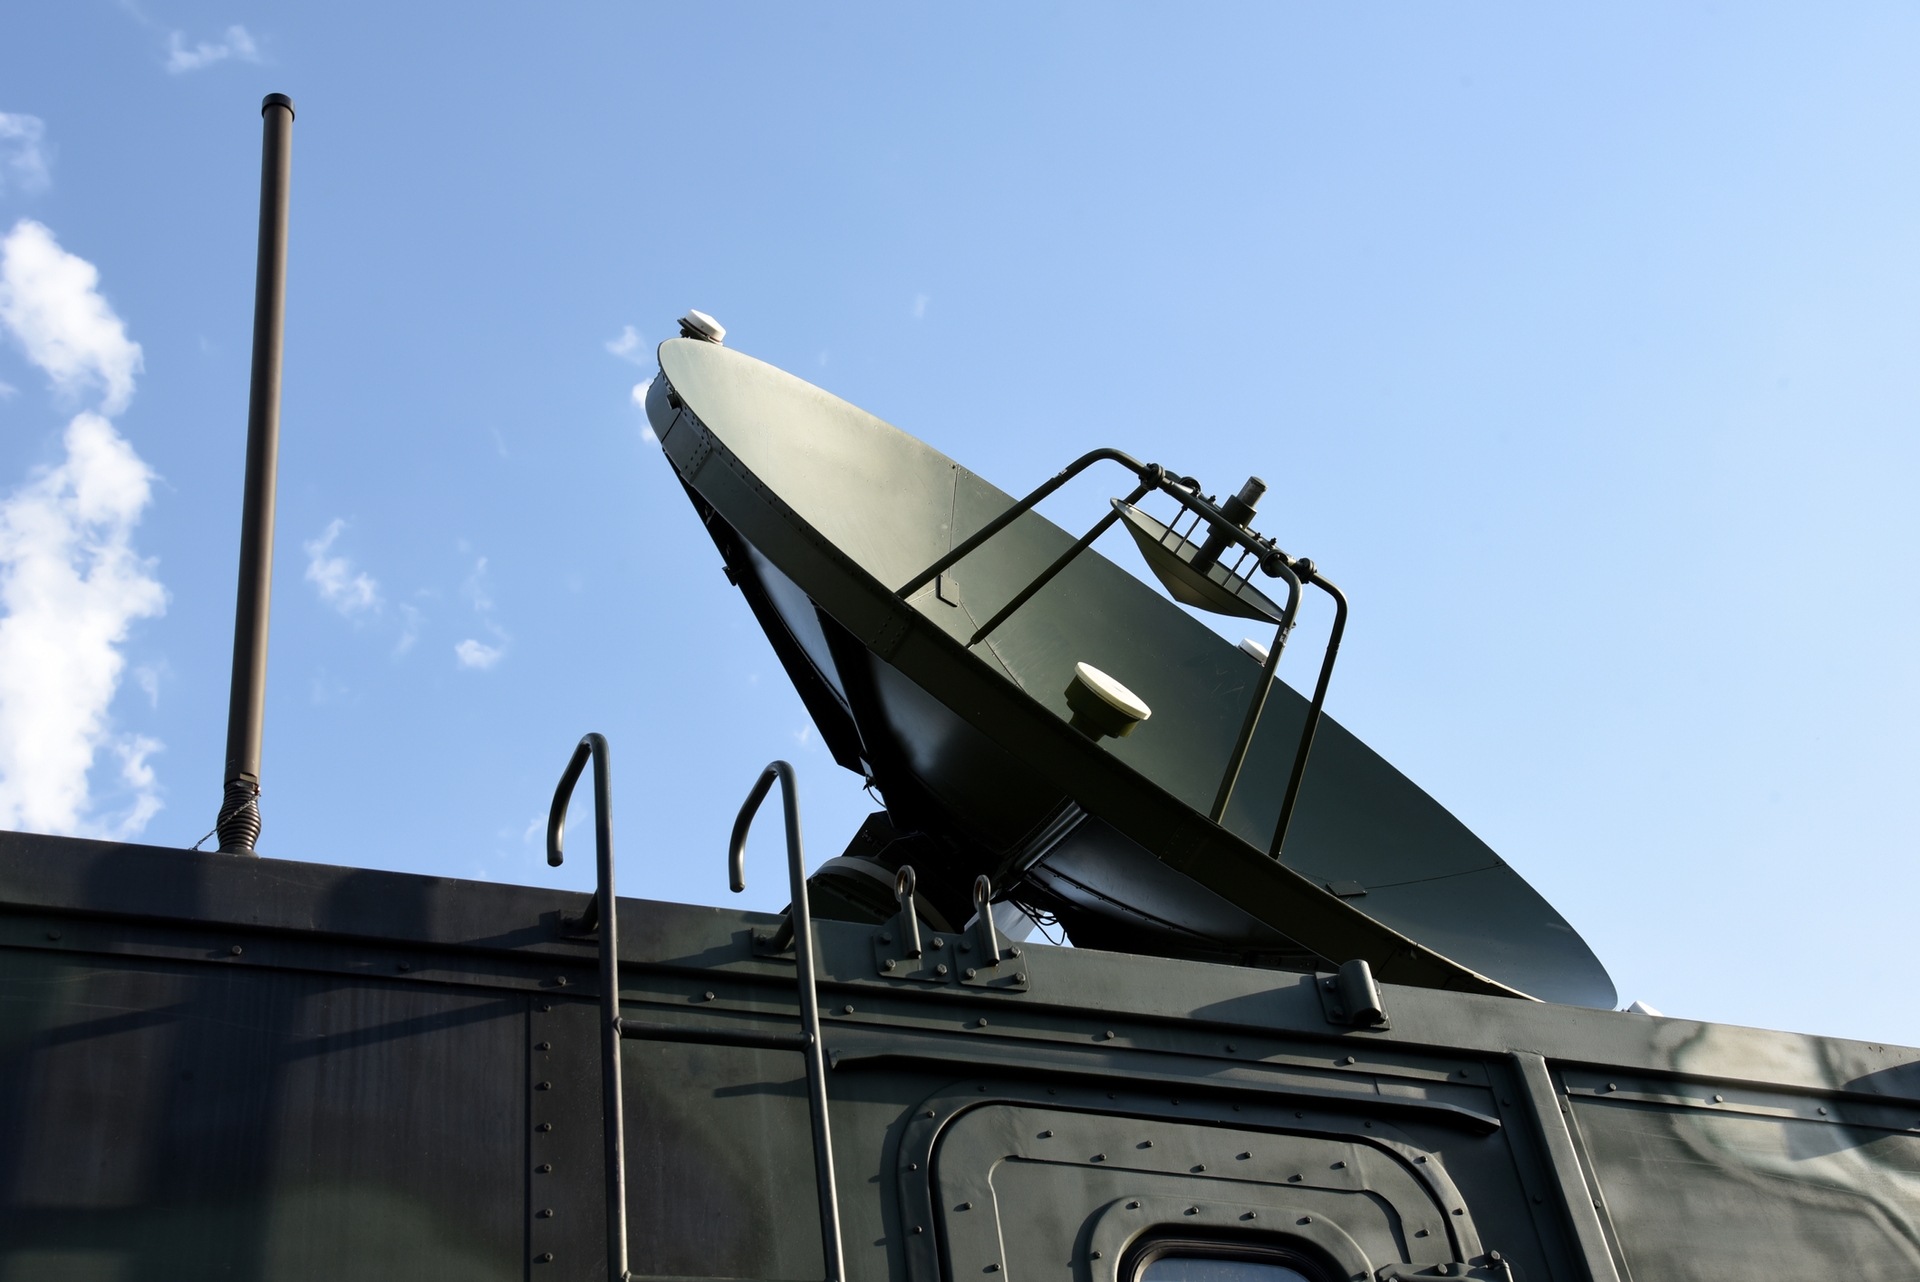 Electronic warfare radar